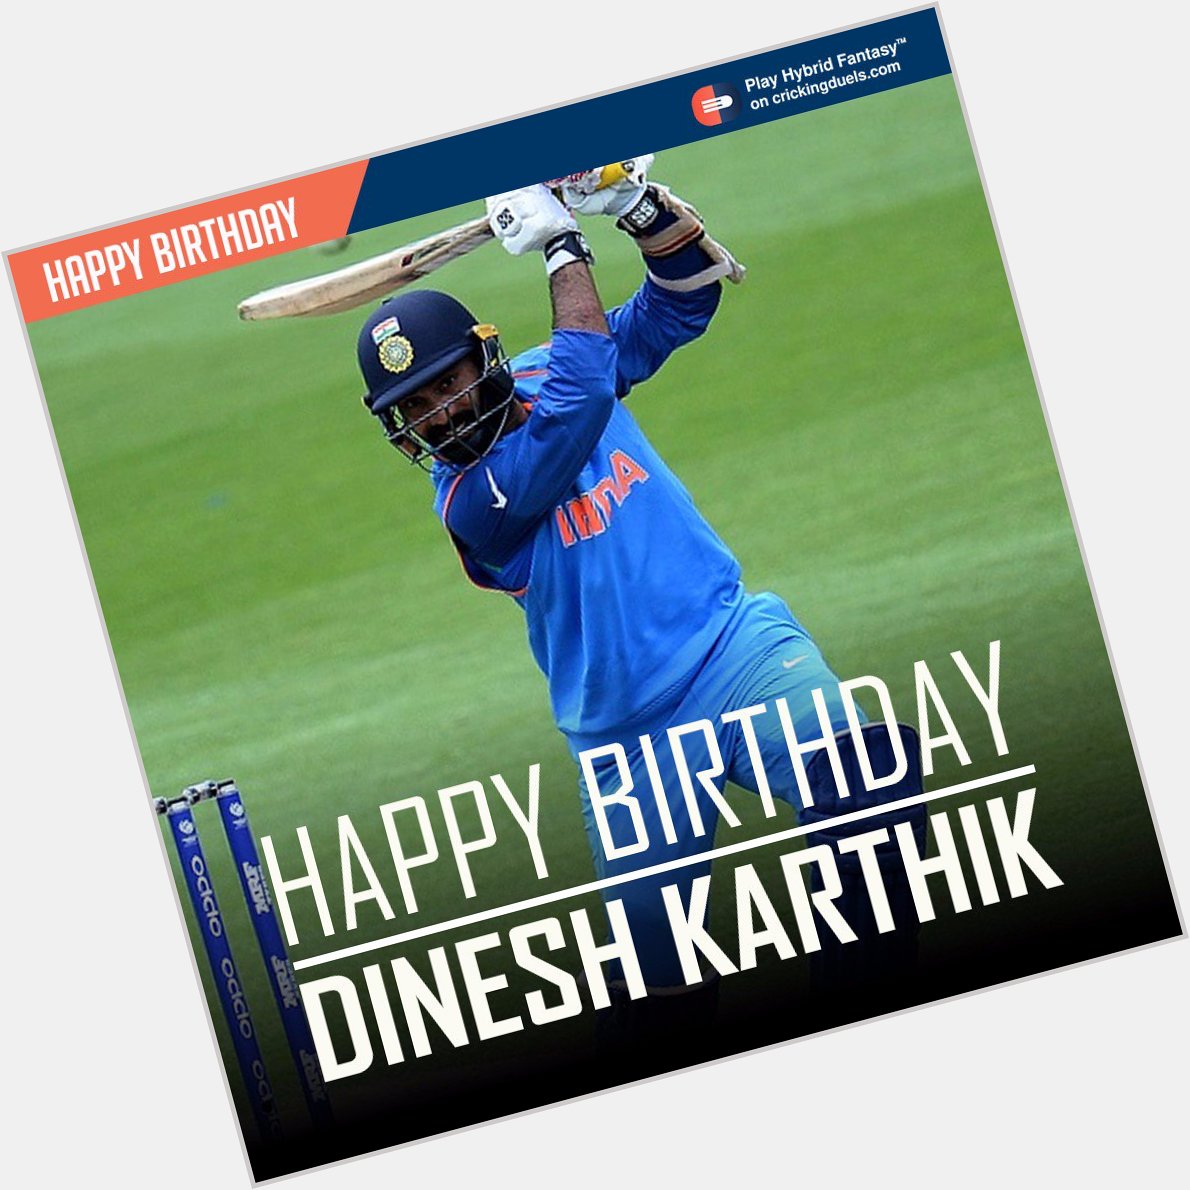 Happy Birthday Dinesh Karthik. The Indian cricketer turns 32 today. 